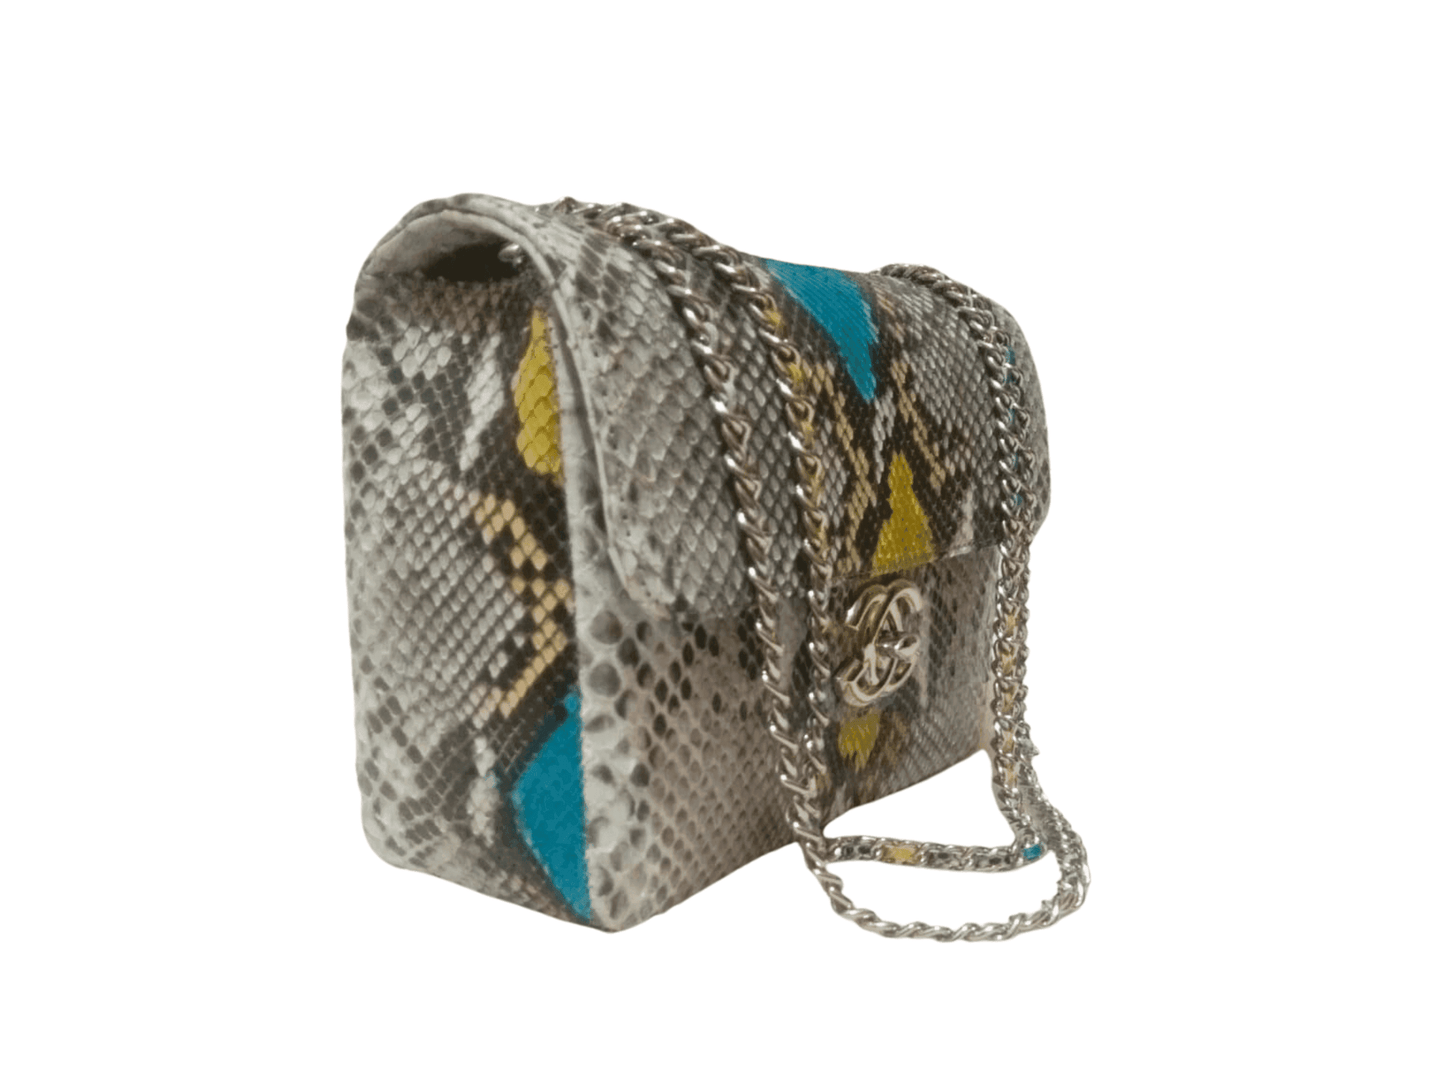 Chanel Small Flap Snakeskin Shoulder Bag Python Jacket by LFM Fashion